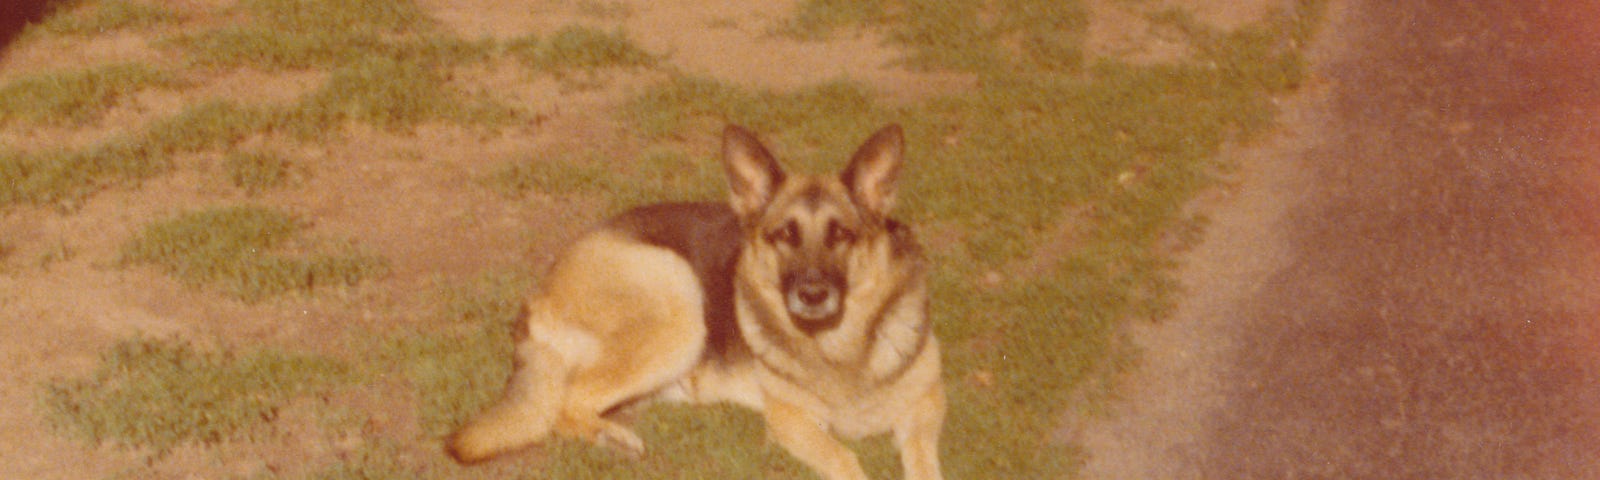 Vintage photograph of a German shepherd dog.